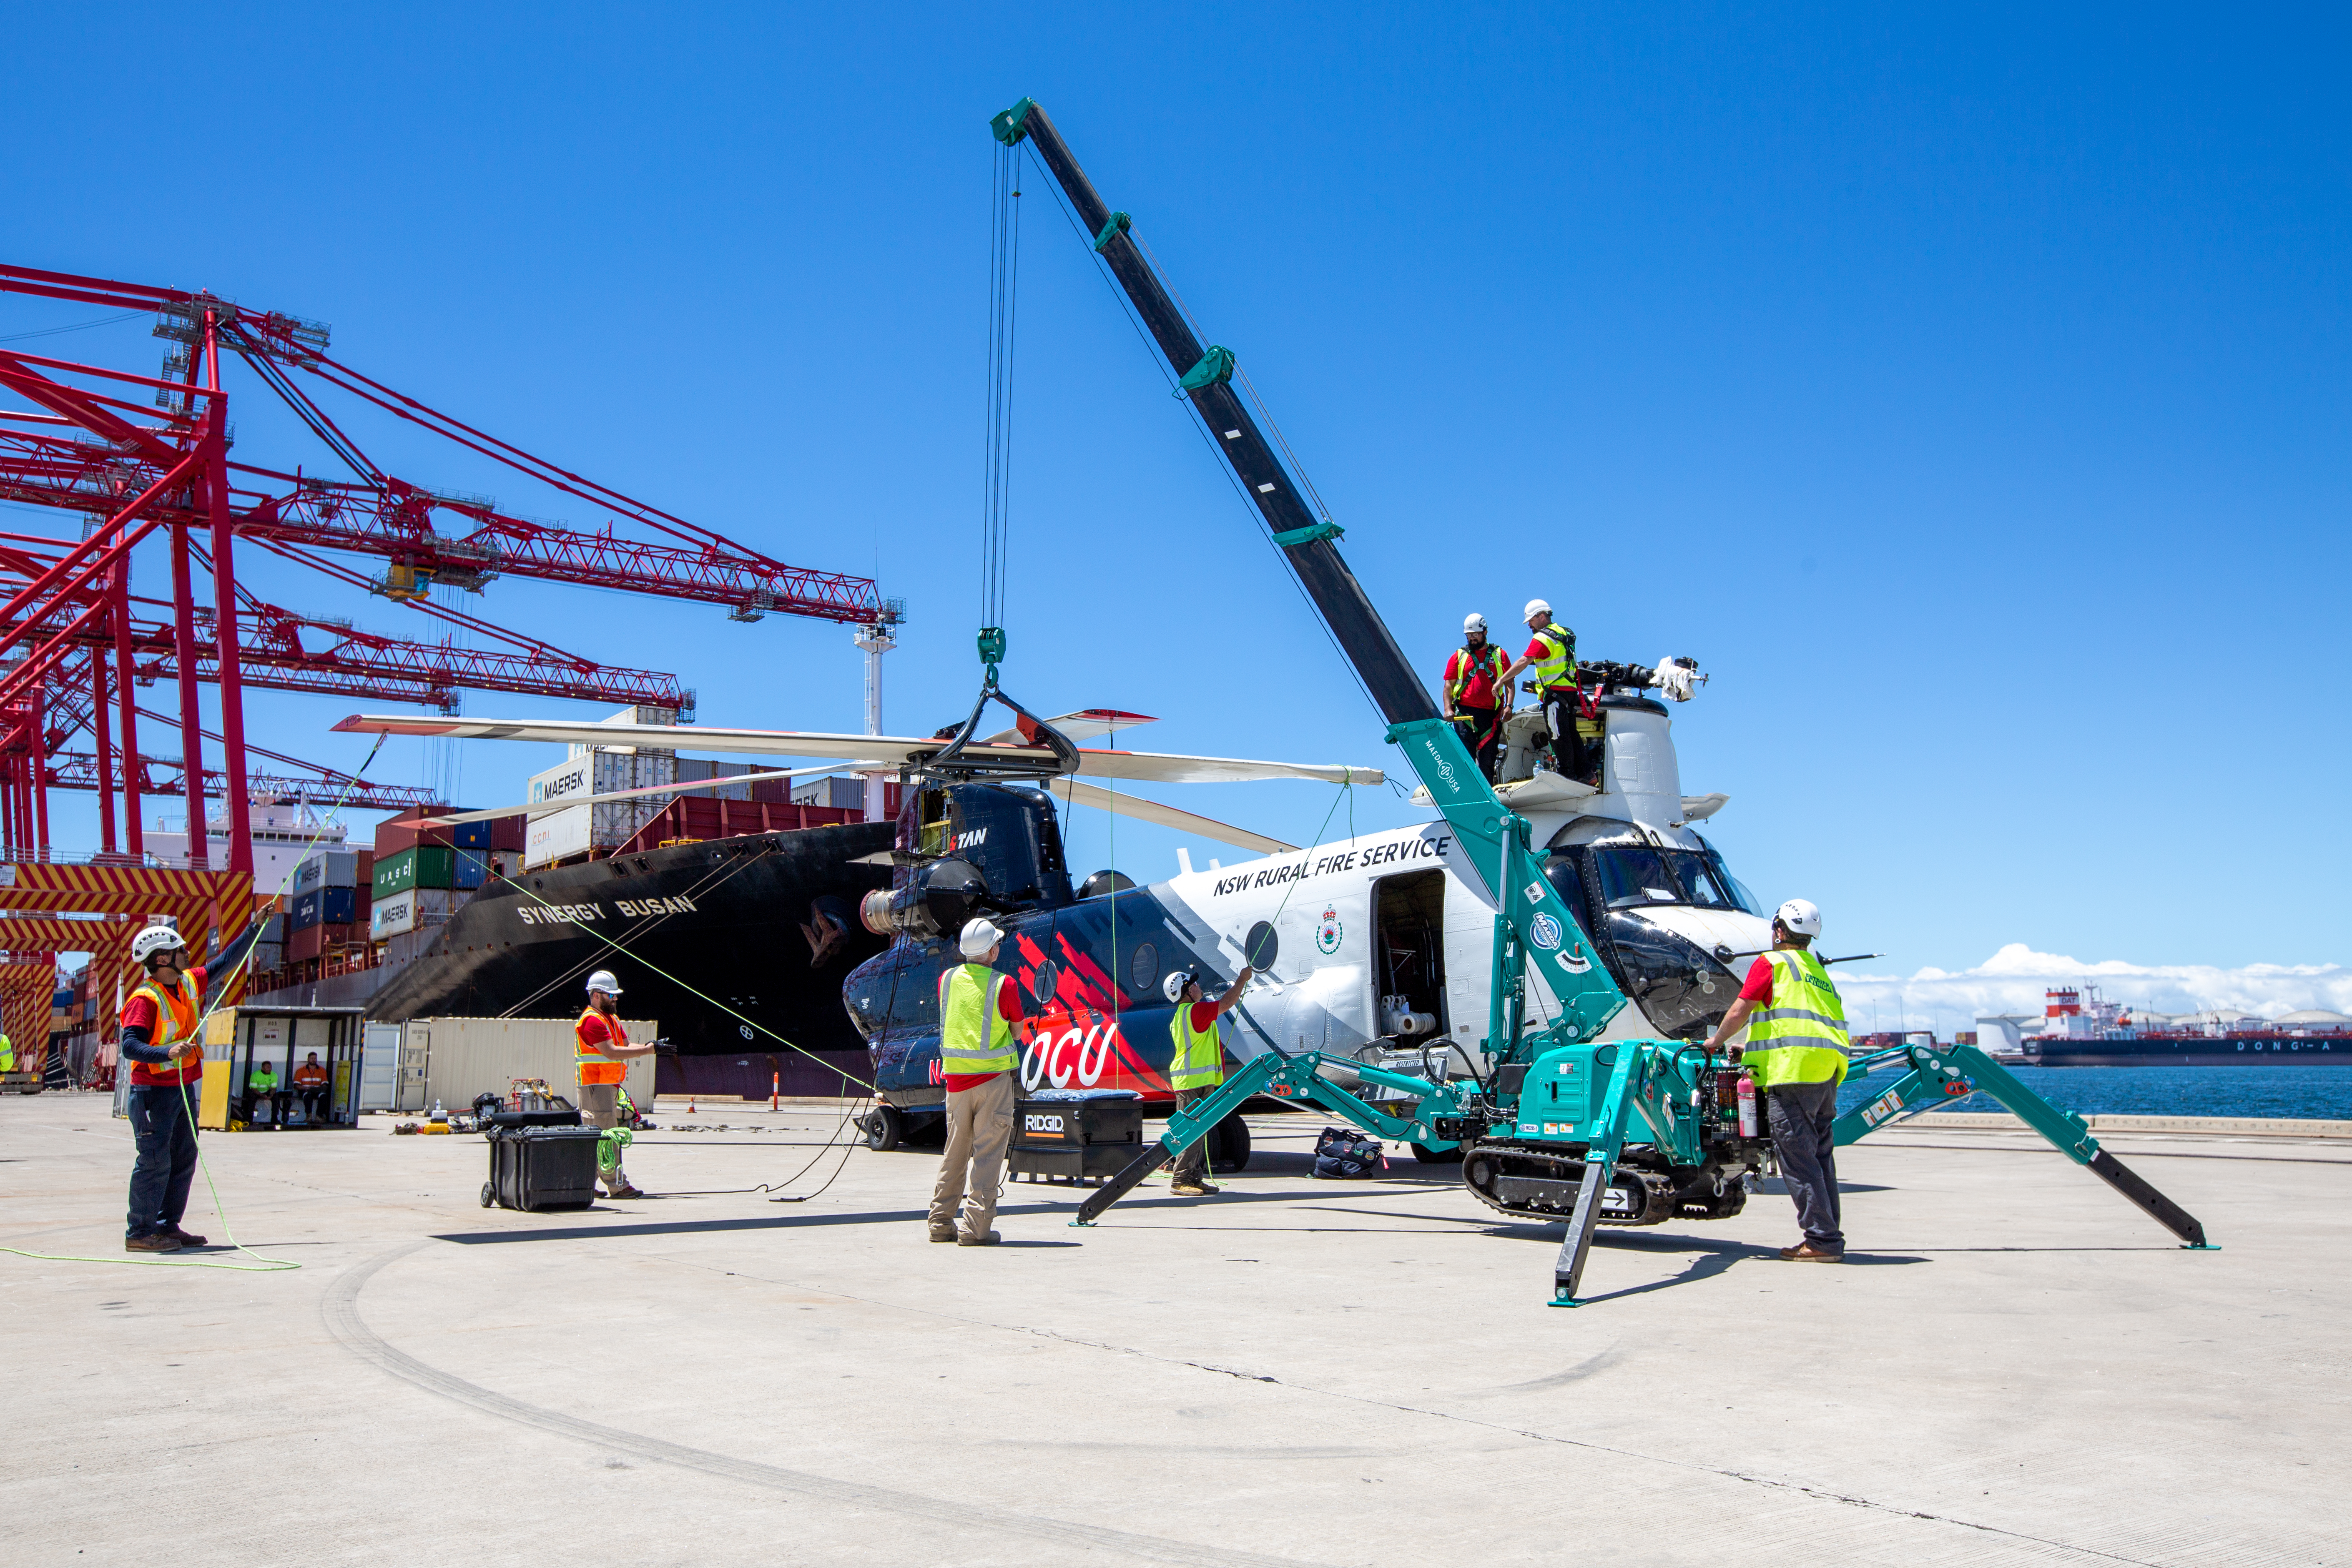 Chopper being built on Patrick Terminals' dock